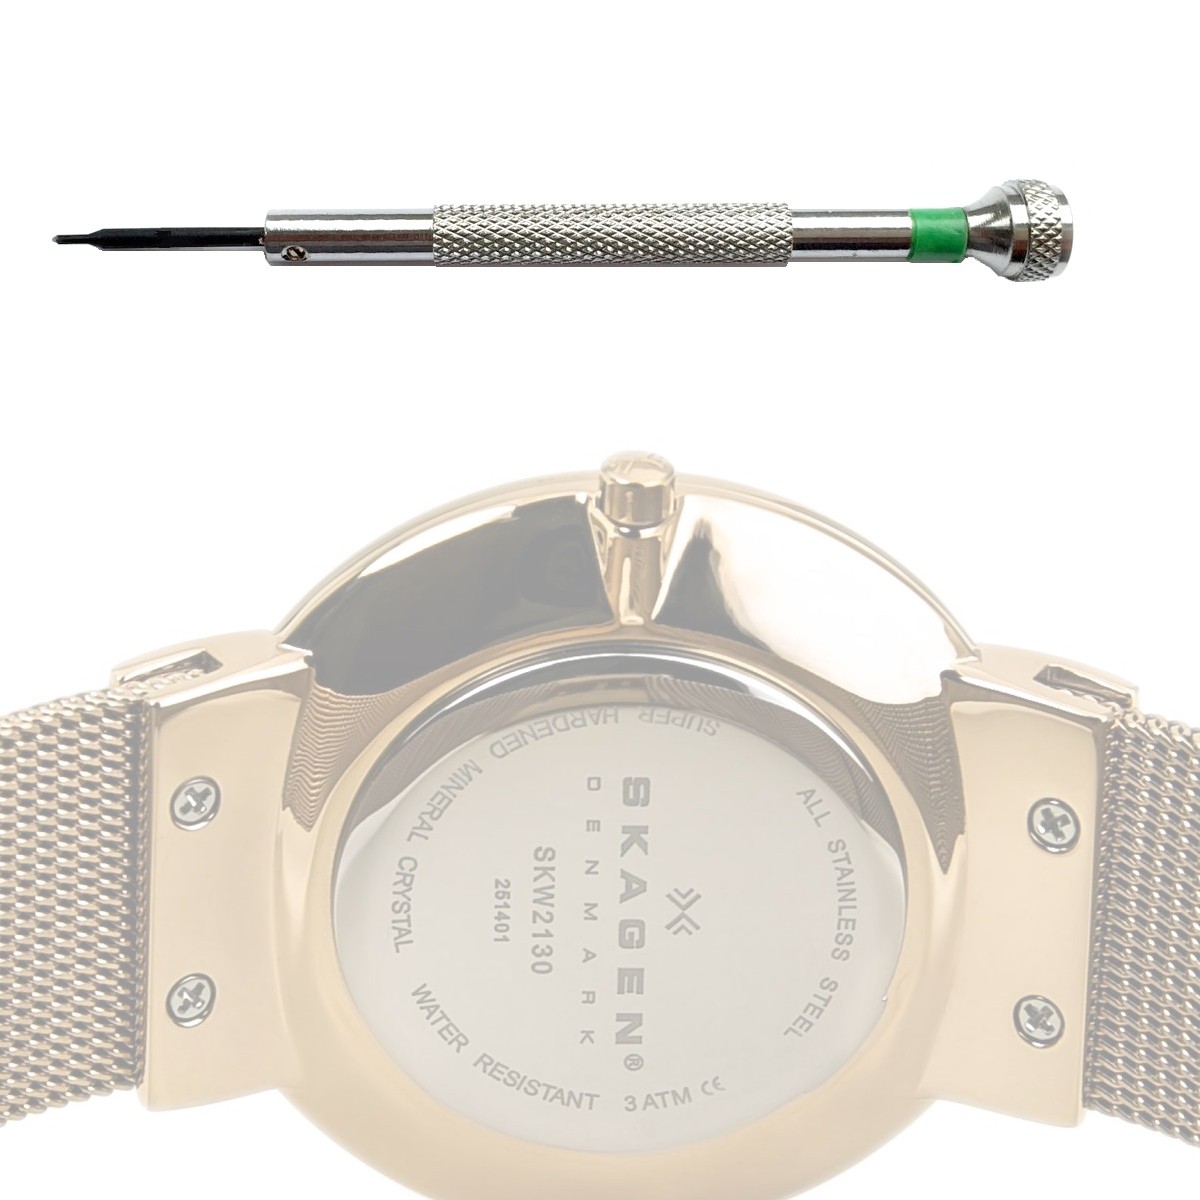 Details about   S1 Screwdriver Bracelet change at Skagen Watches r Armbandwechsel an Skagen Uhren data-mtsrclang=en-US href=# onclick=return false; 							show original title 